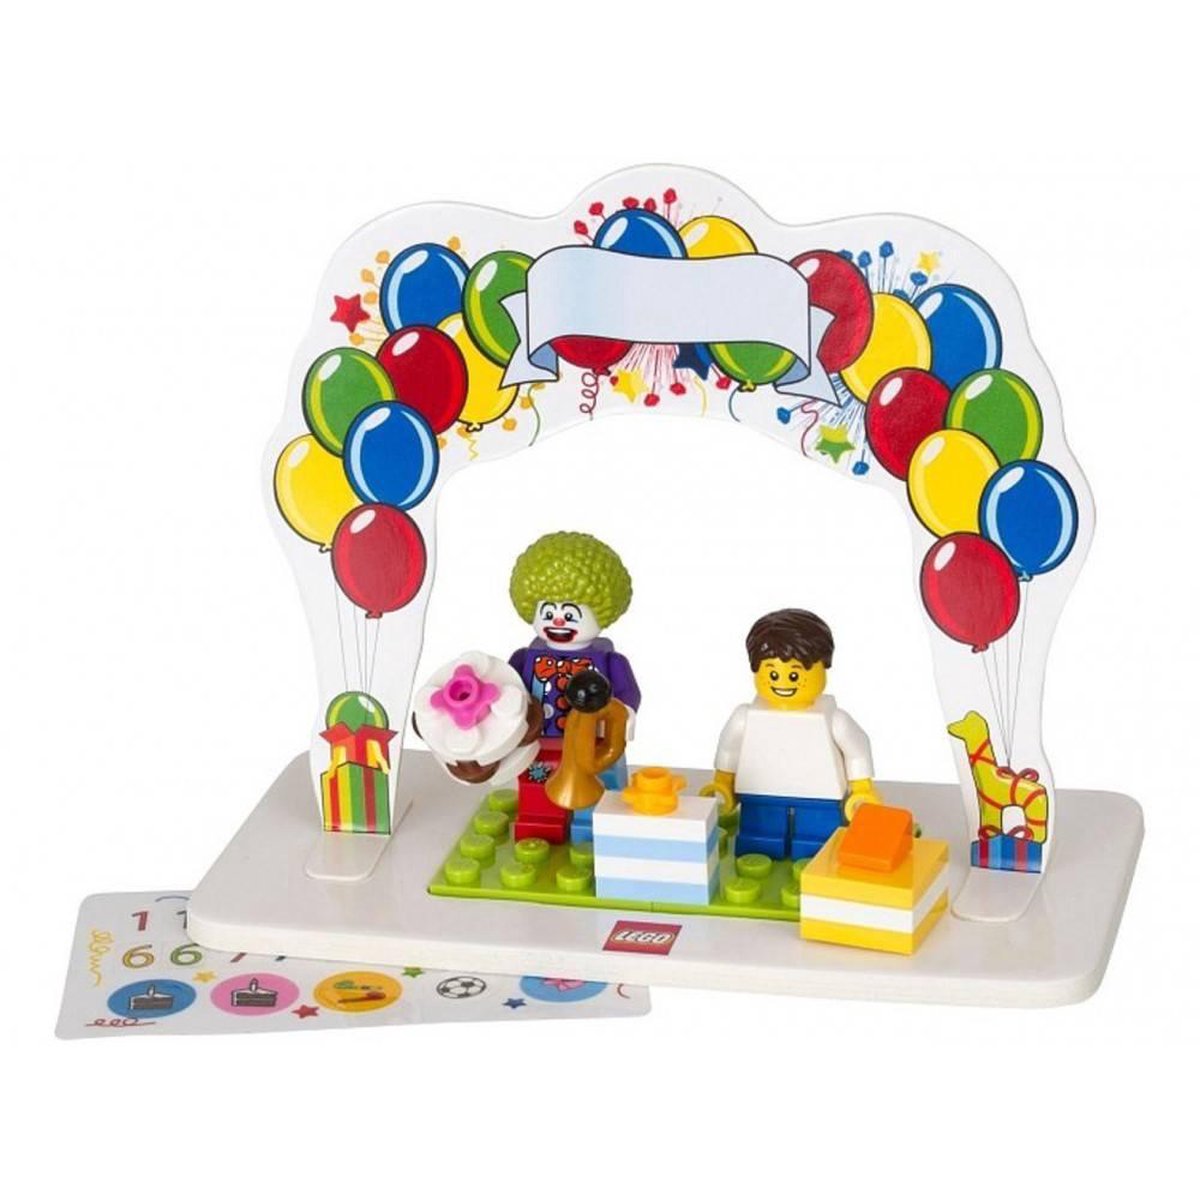 Diorama d'anniversaire LEGO - 40584